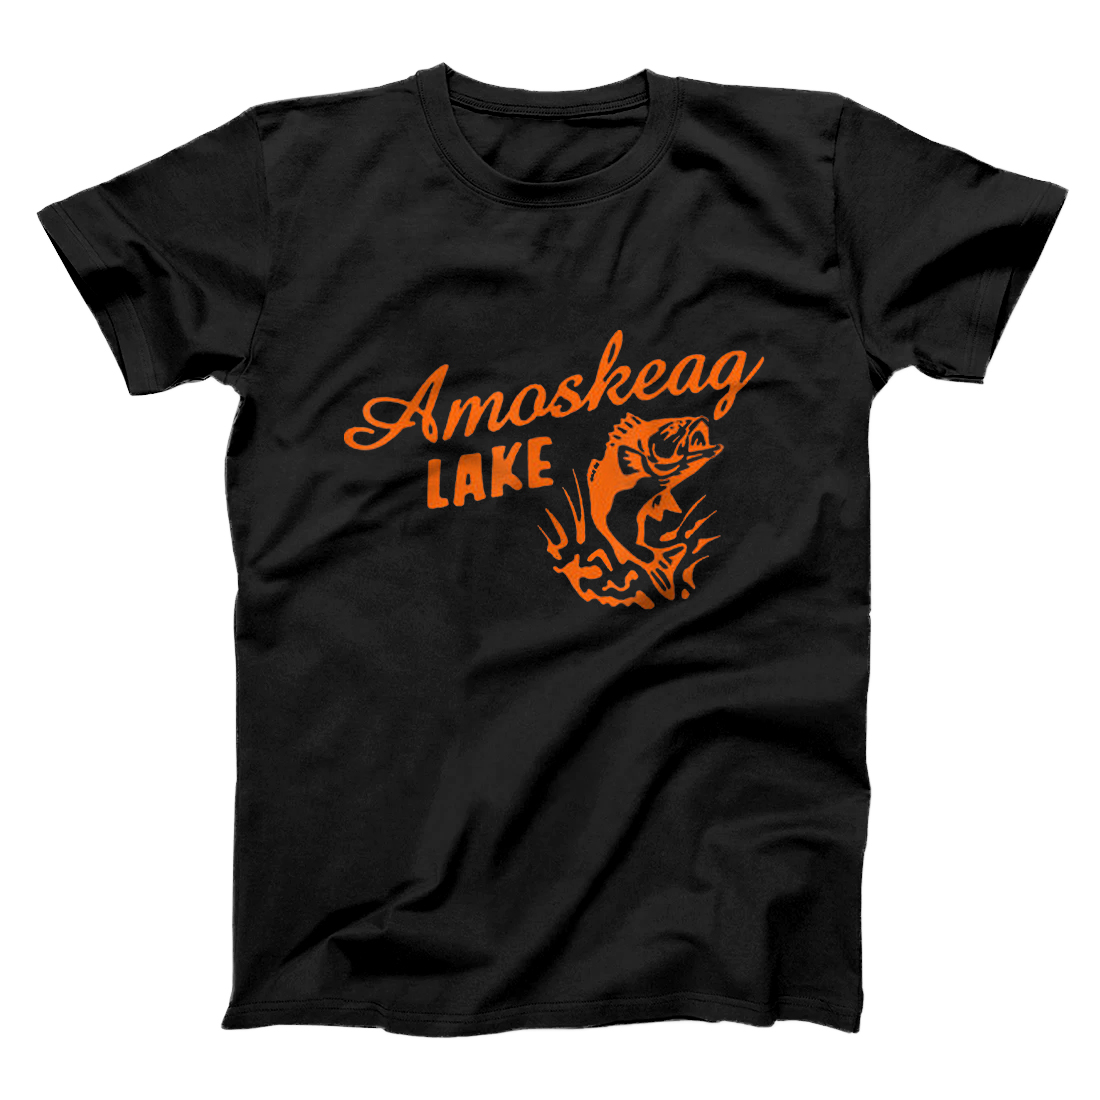 Personalized Amoskeag Lake gift T-Shirt